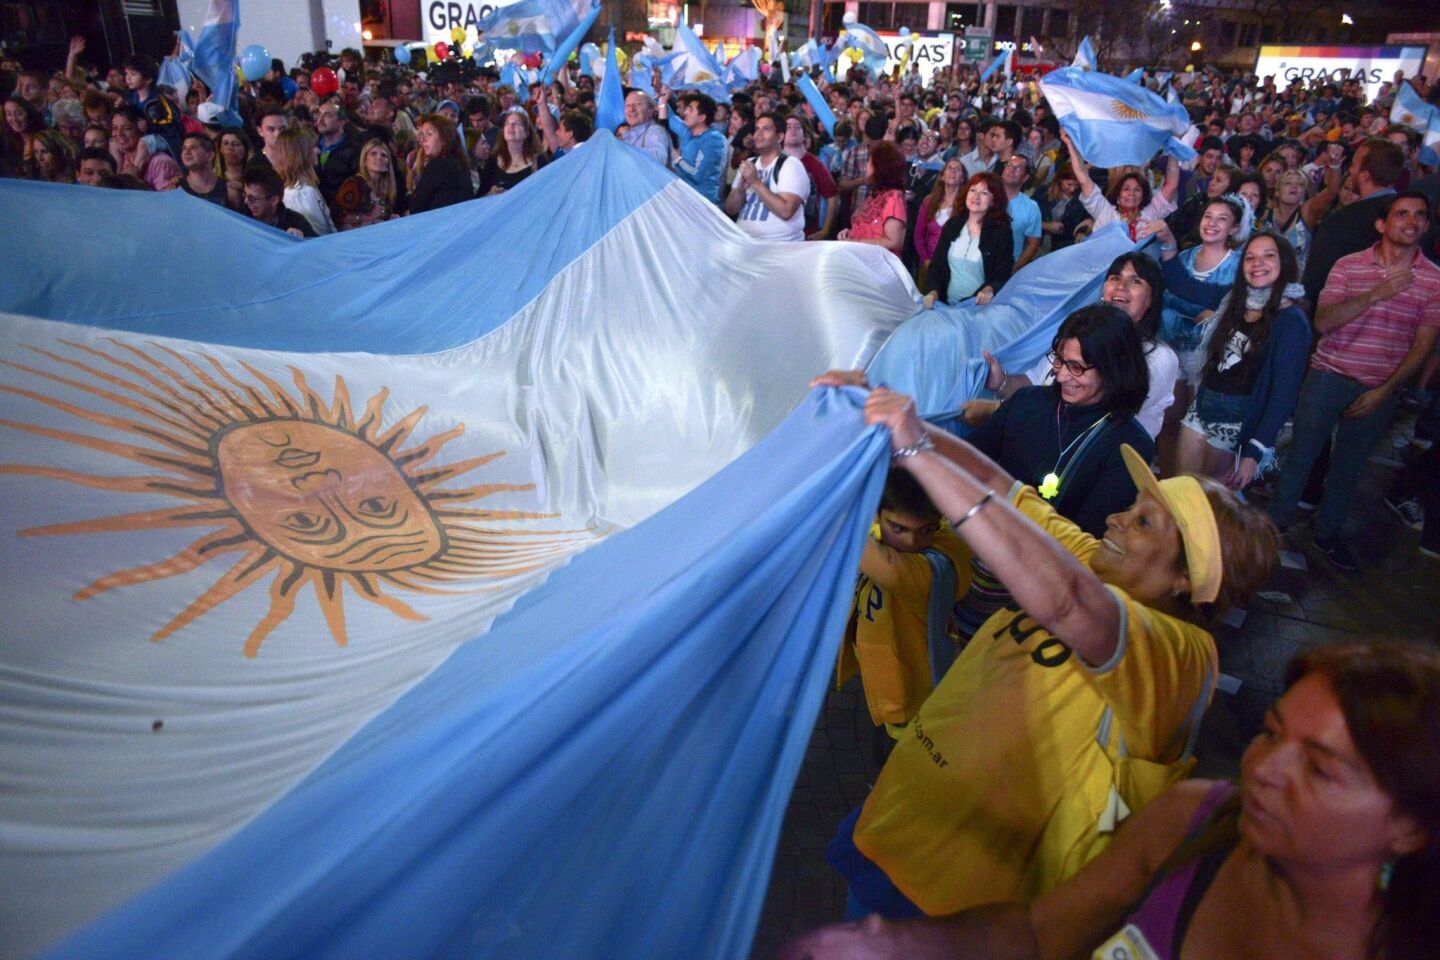 Mauricio Macri elected president of Argentina